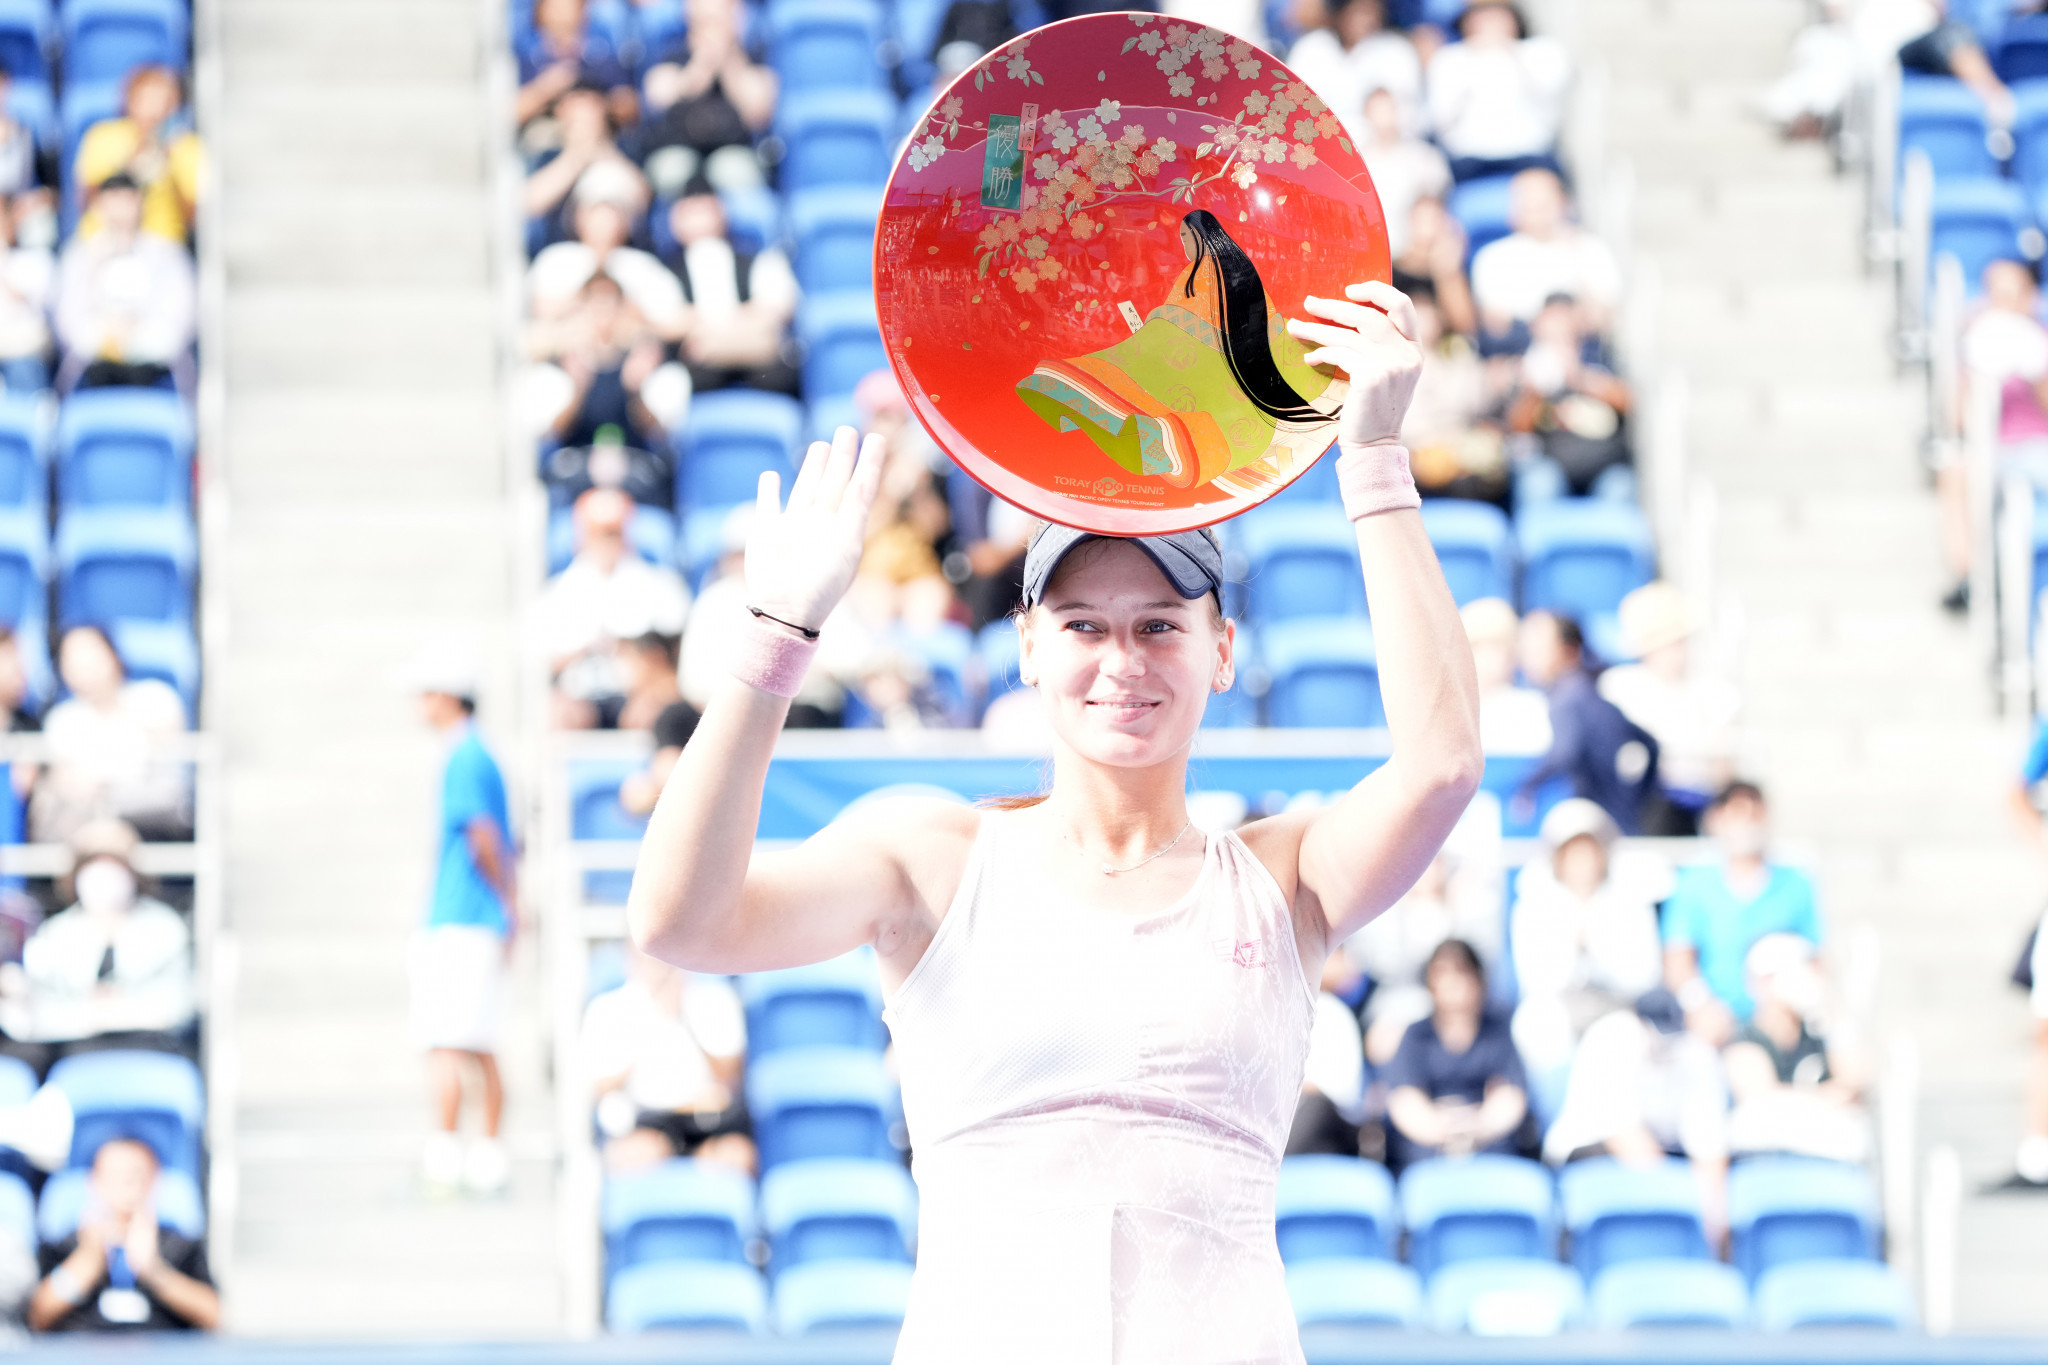 Russian player Veronika Kudermetova, who beat Tsurenko at the China Open today, won the Toray Pan Pacific Open tournament on October 1  ©Getty Images